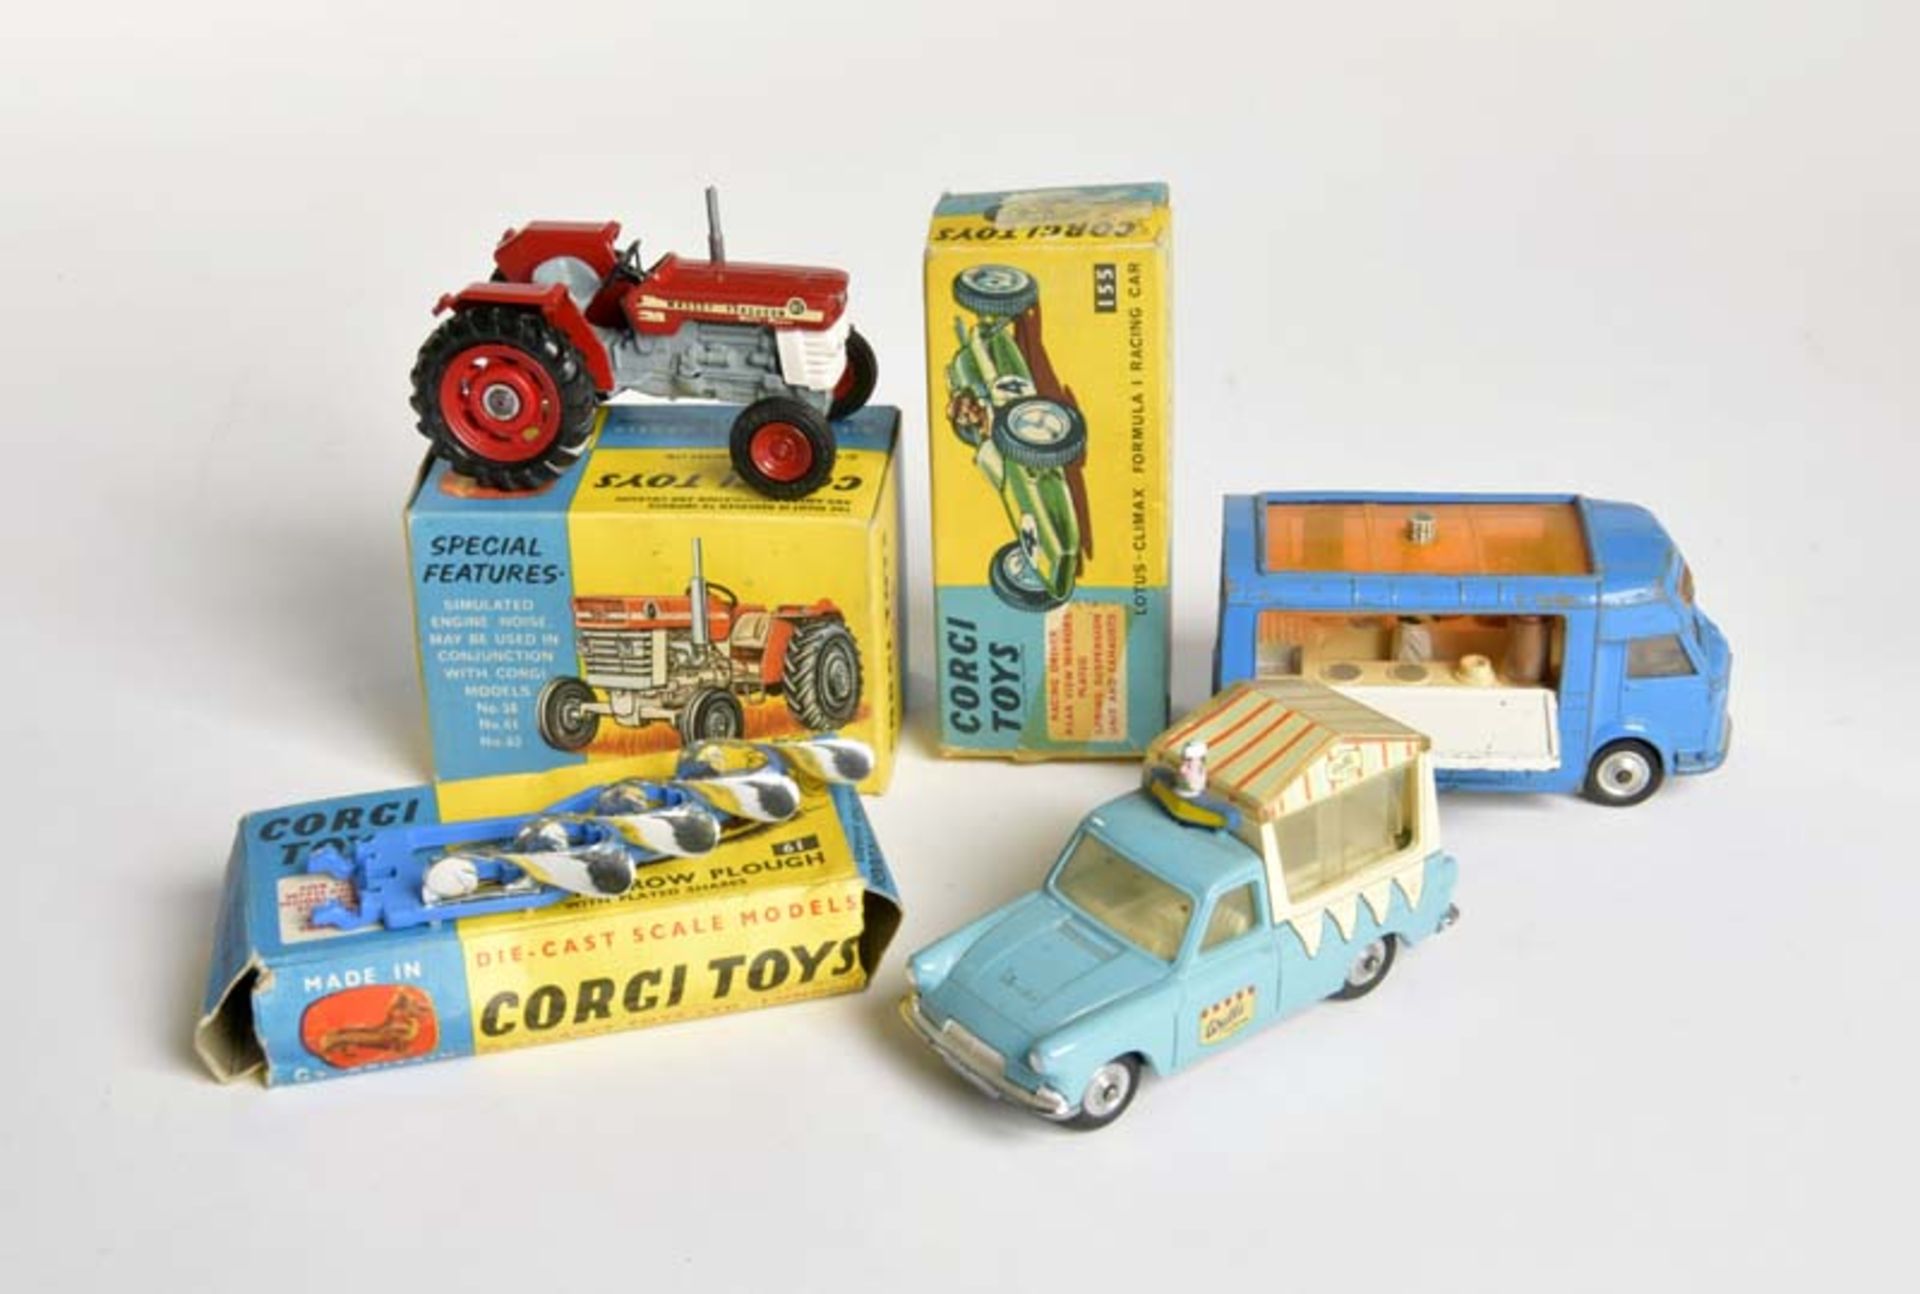 Corgi Toys, Ice Cream Van, Snackbar Van, Tractor a.o., Great Britain, 1:43, diecast, please inspect,